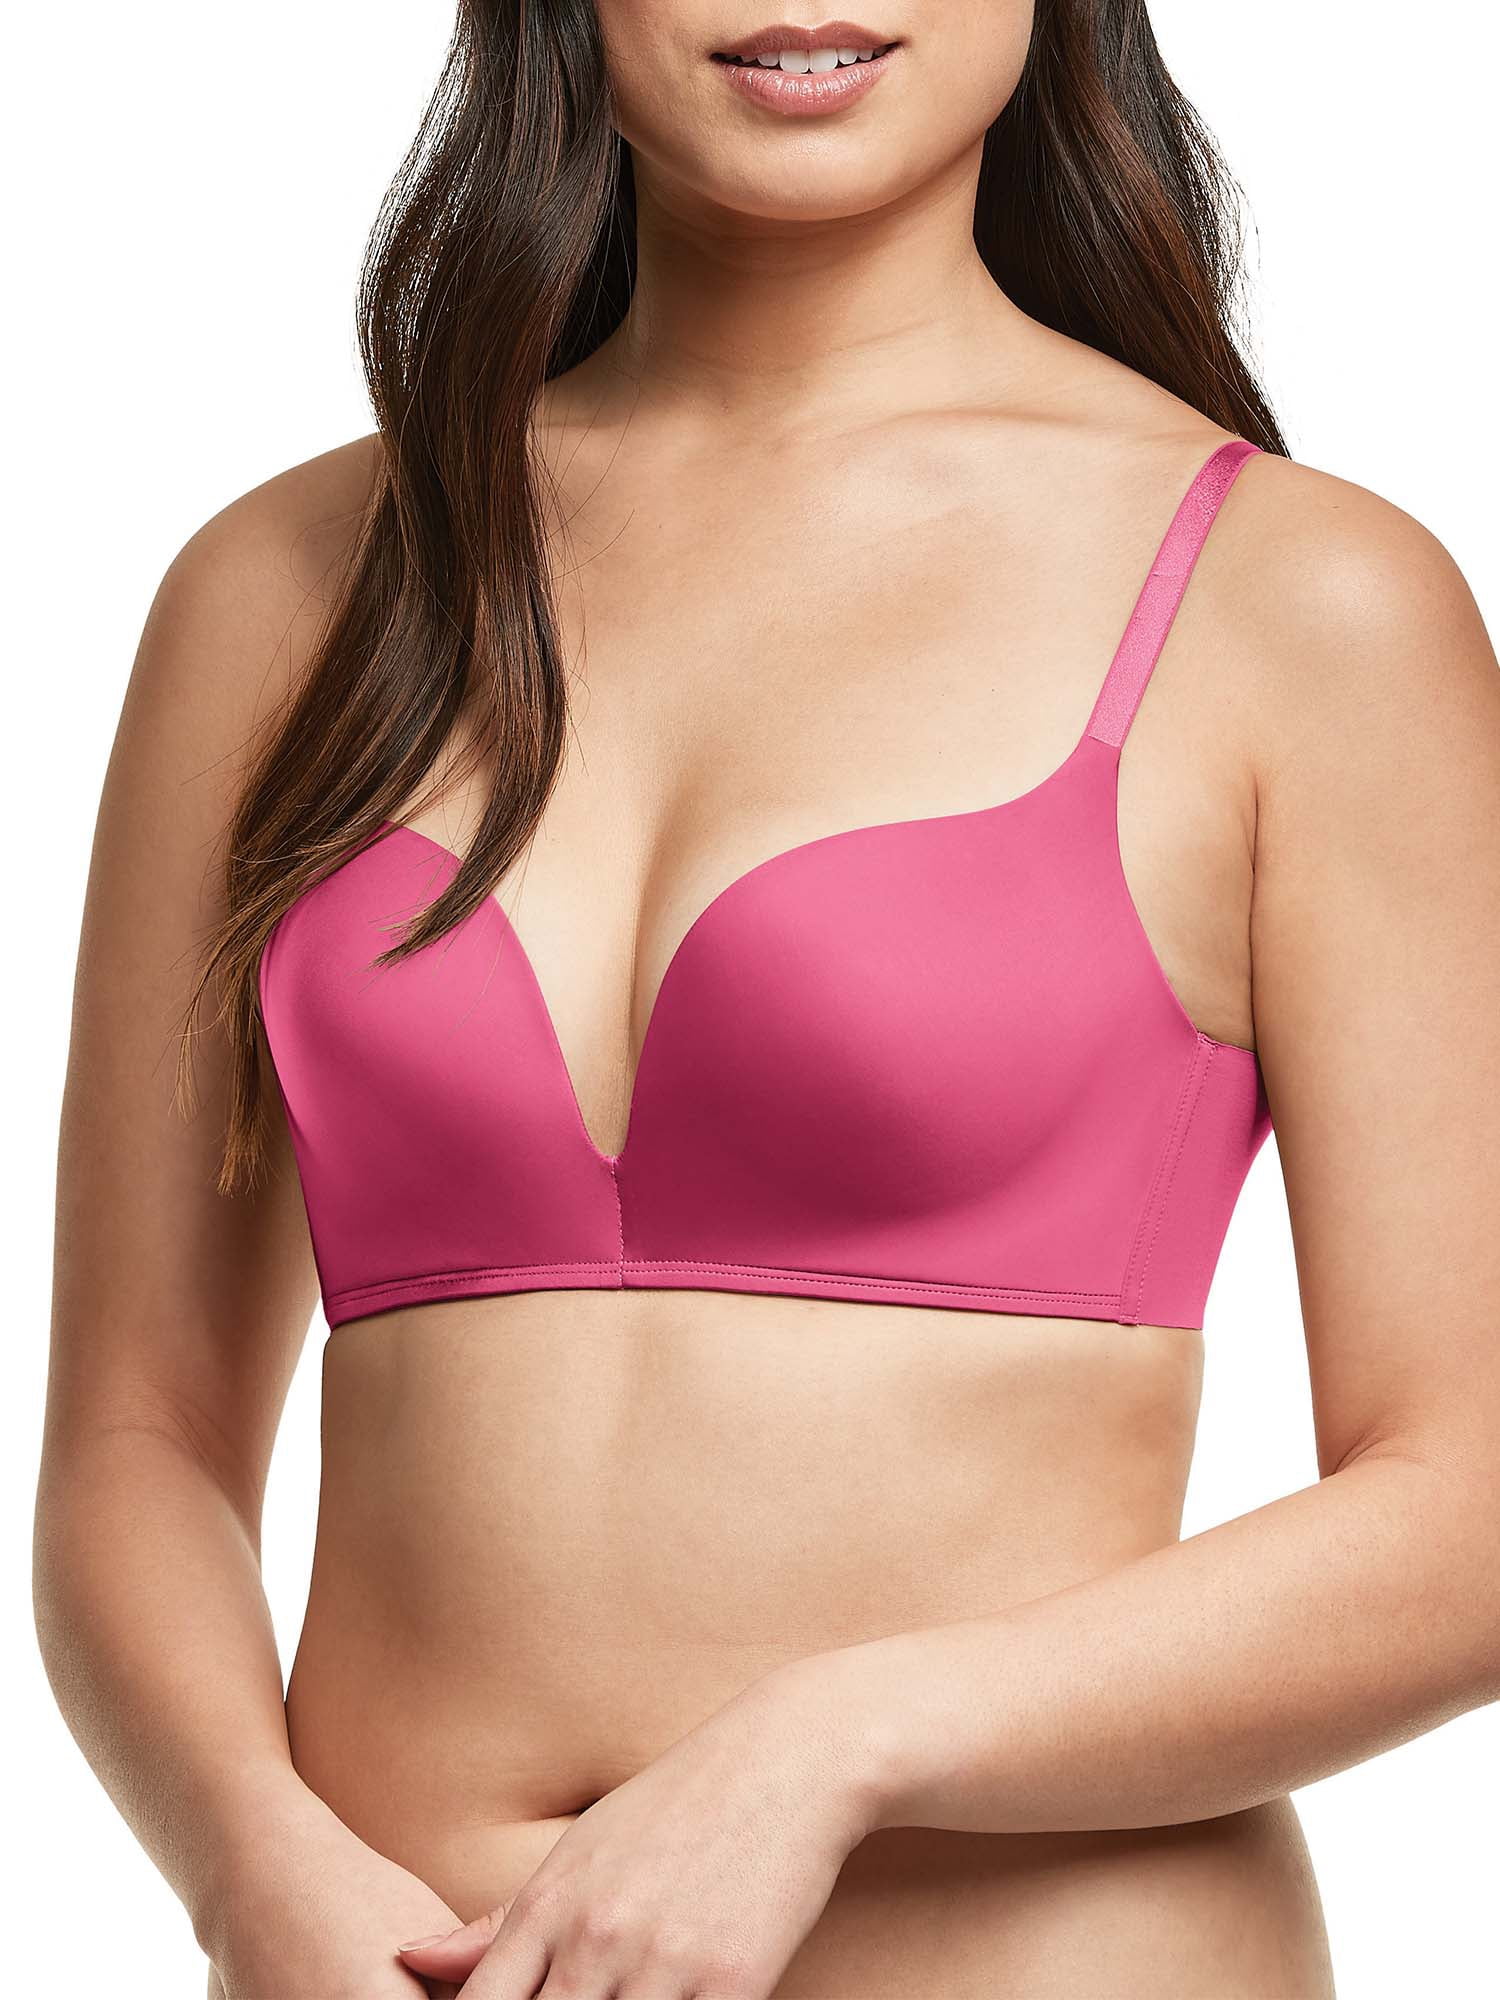 Victoria's Secret Wireless Bra - 32D  Wireless bra, Clothes design, Fashion